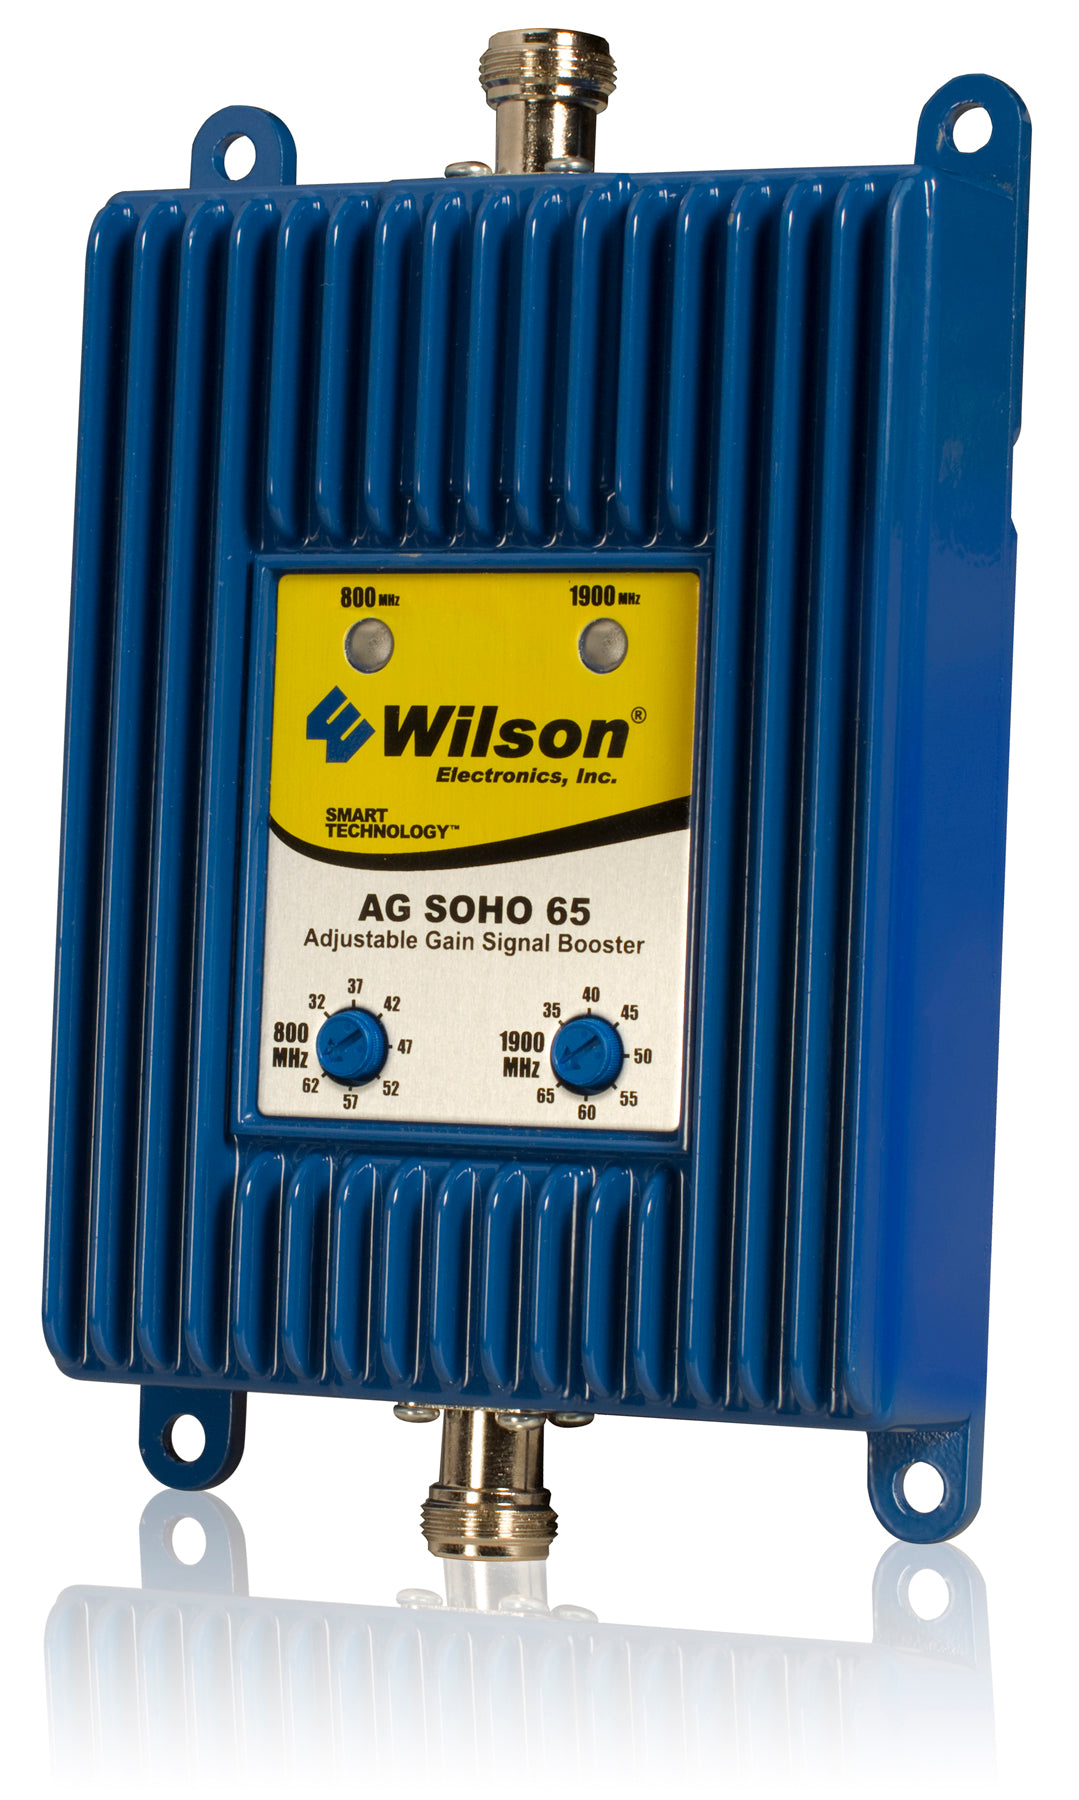 Wilson 805045 AG SOHO 65 dB Dual-Band Amplifier [Discontinued]